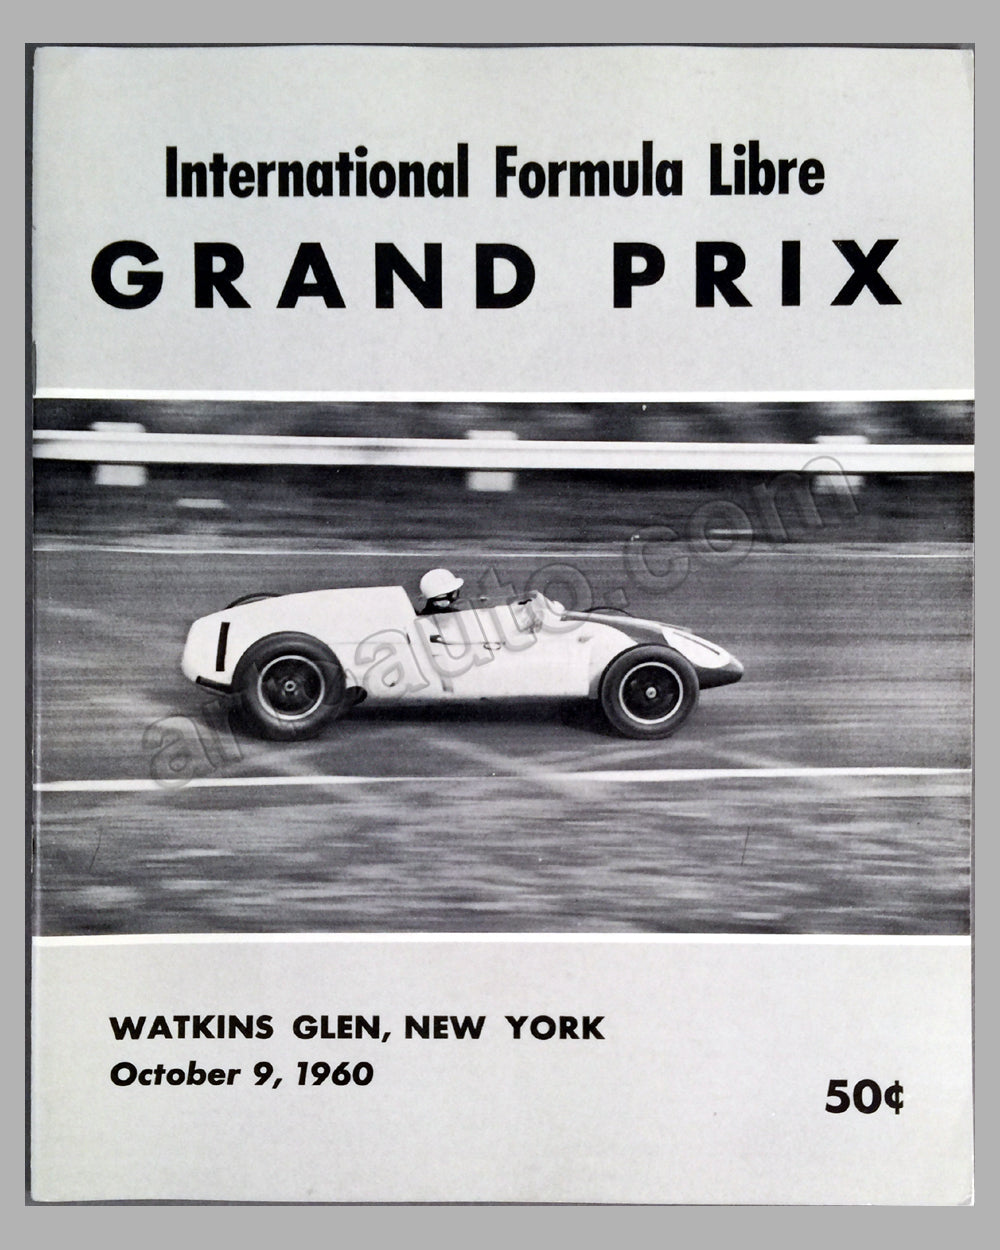 International Formula Libre Grand Prix at Watkins Glen Oct. 9, 1960 event program, autographed by Stirling Moss